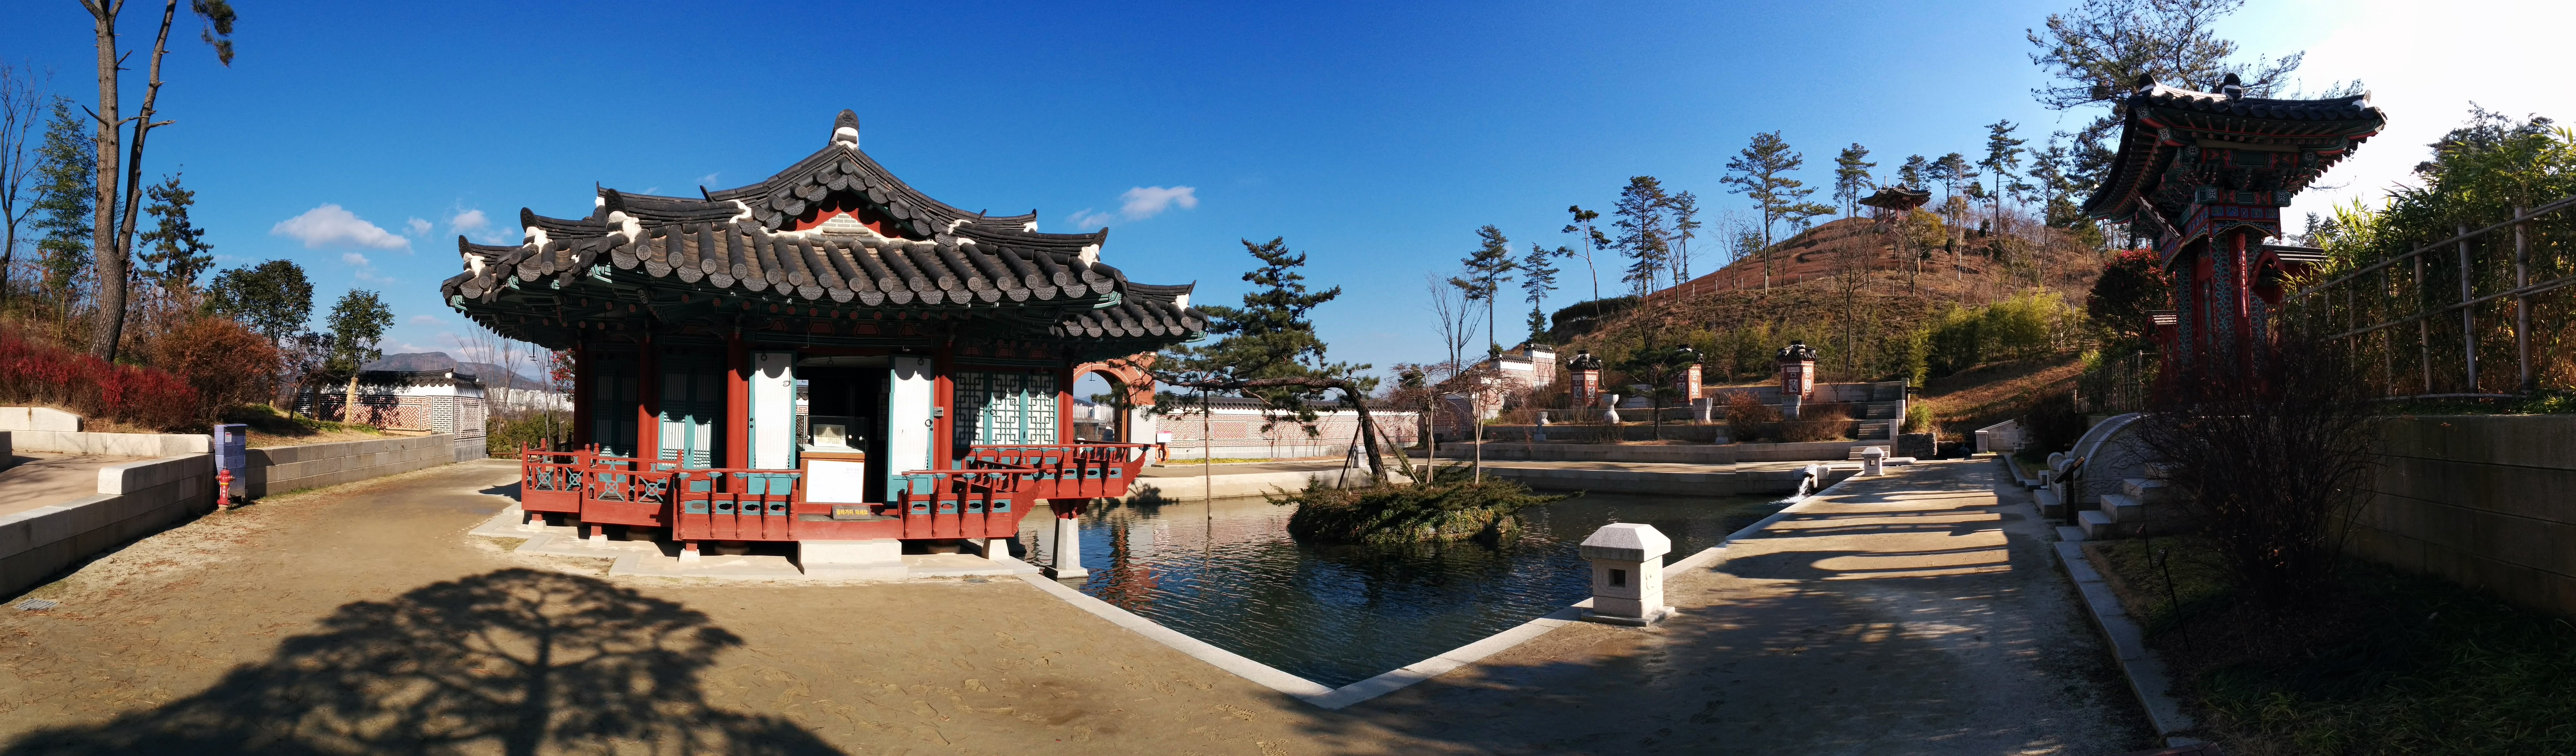 PANO_20151228_135624.jpg 연못이 있는 순천만공원 한국정원 파노라마 사진